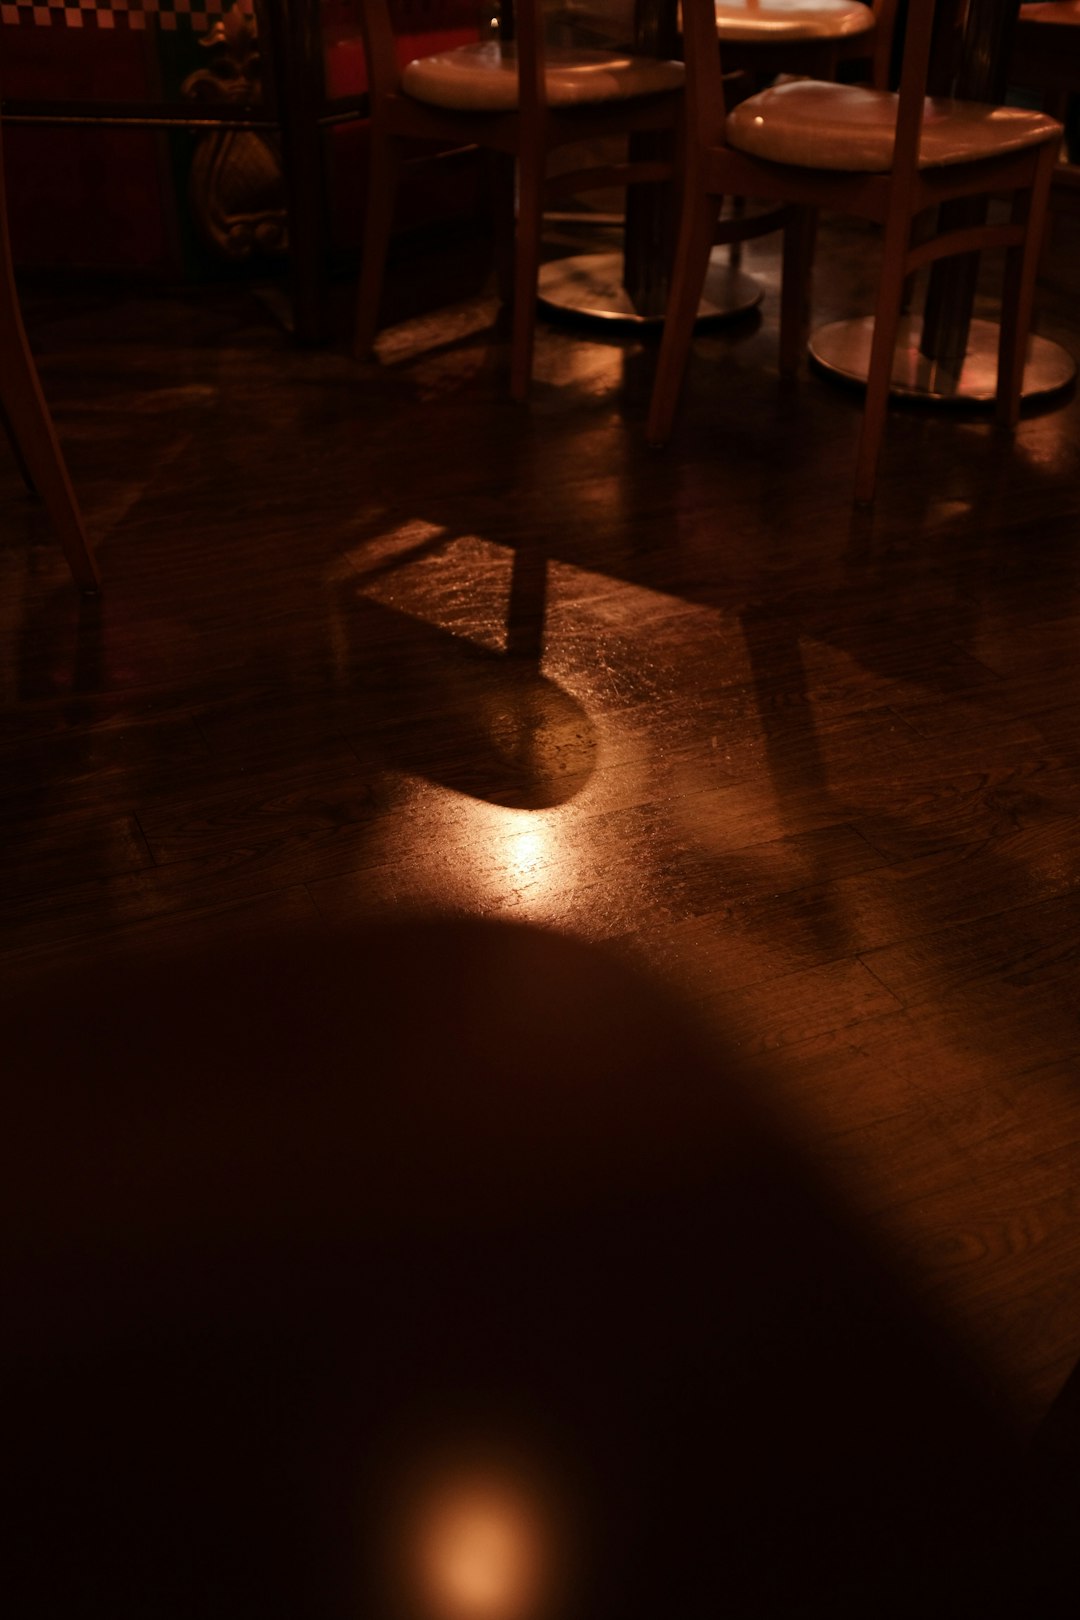 brown wooden chairs on brown wooden floor